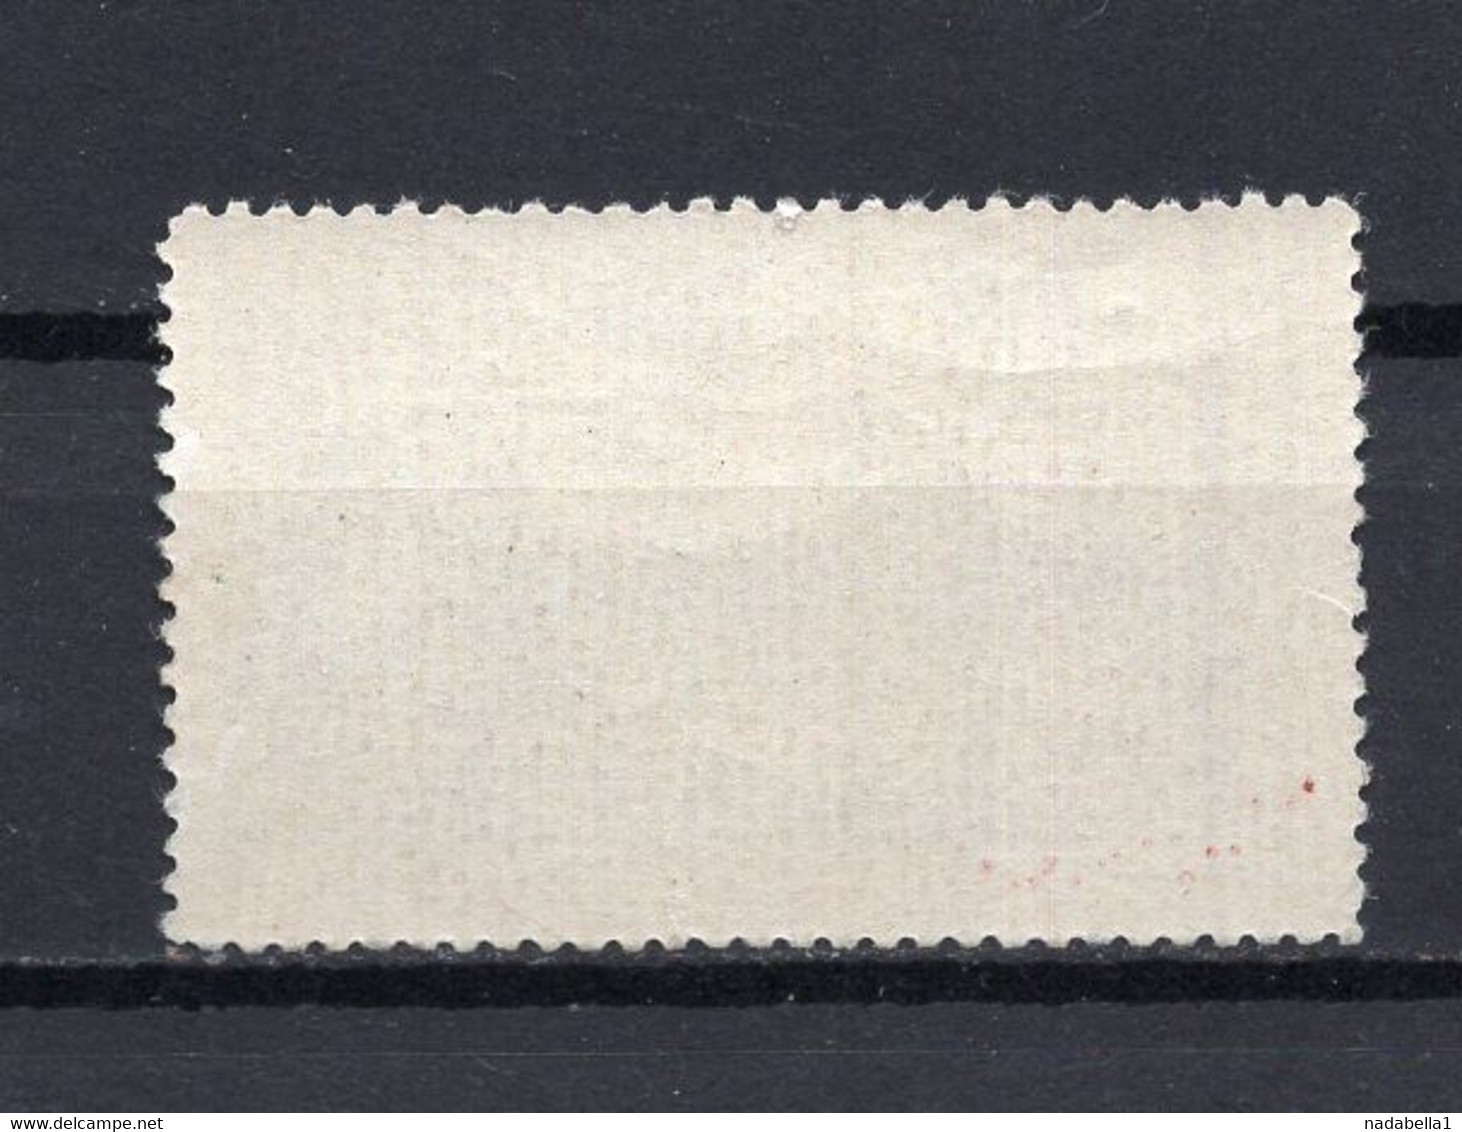 1931. ROMANIA,REVENUE STAMP,2 LEI,MNH - Revenue Stamps